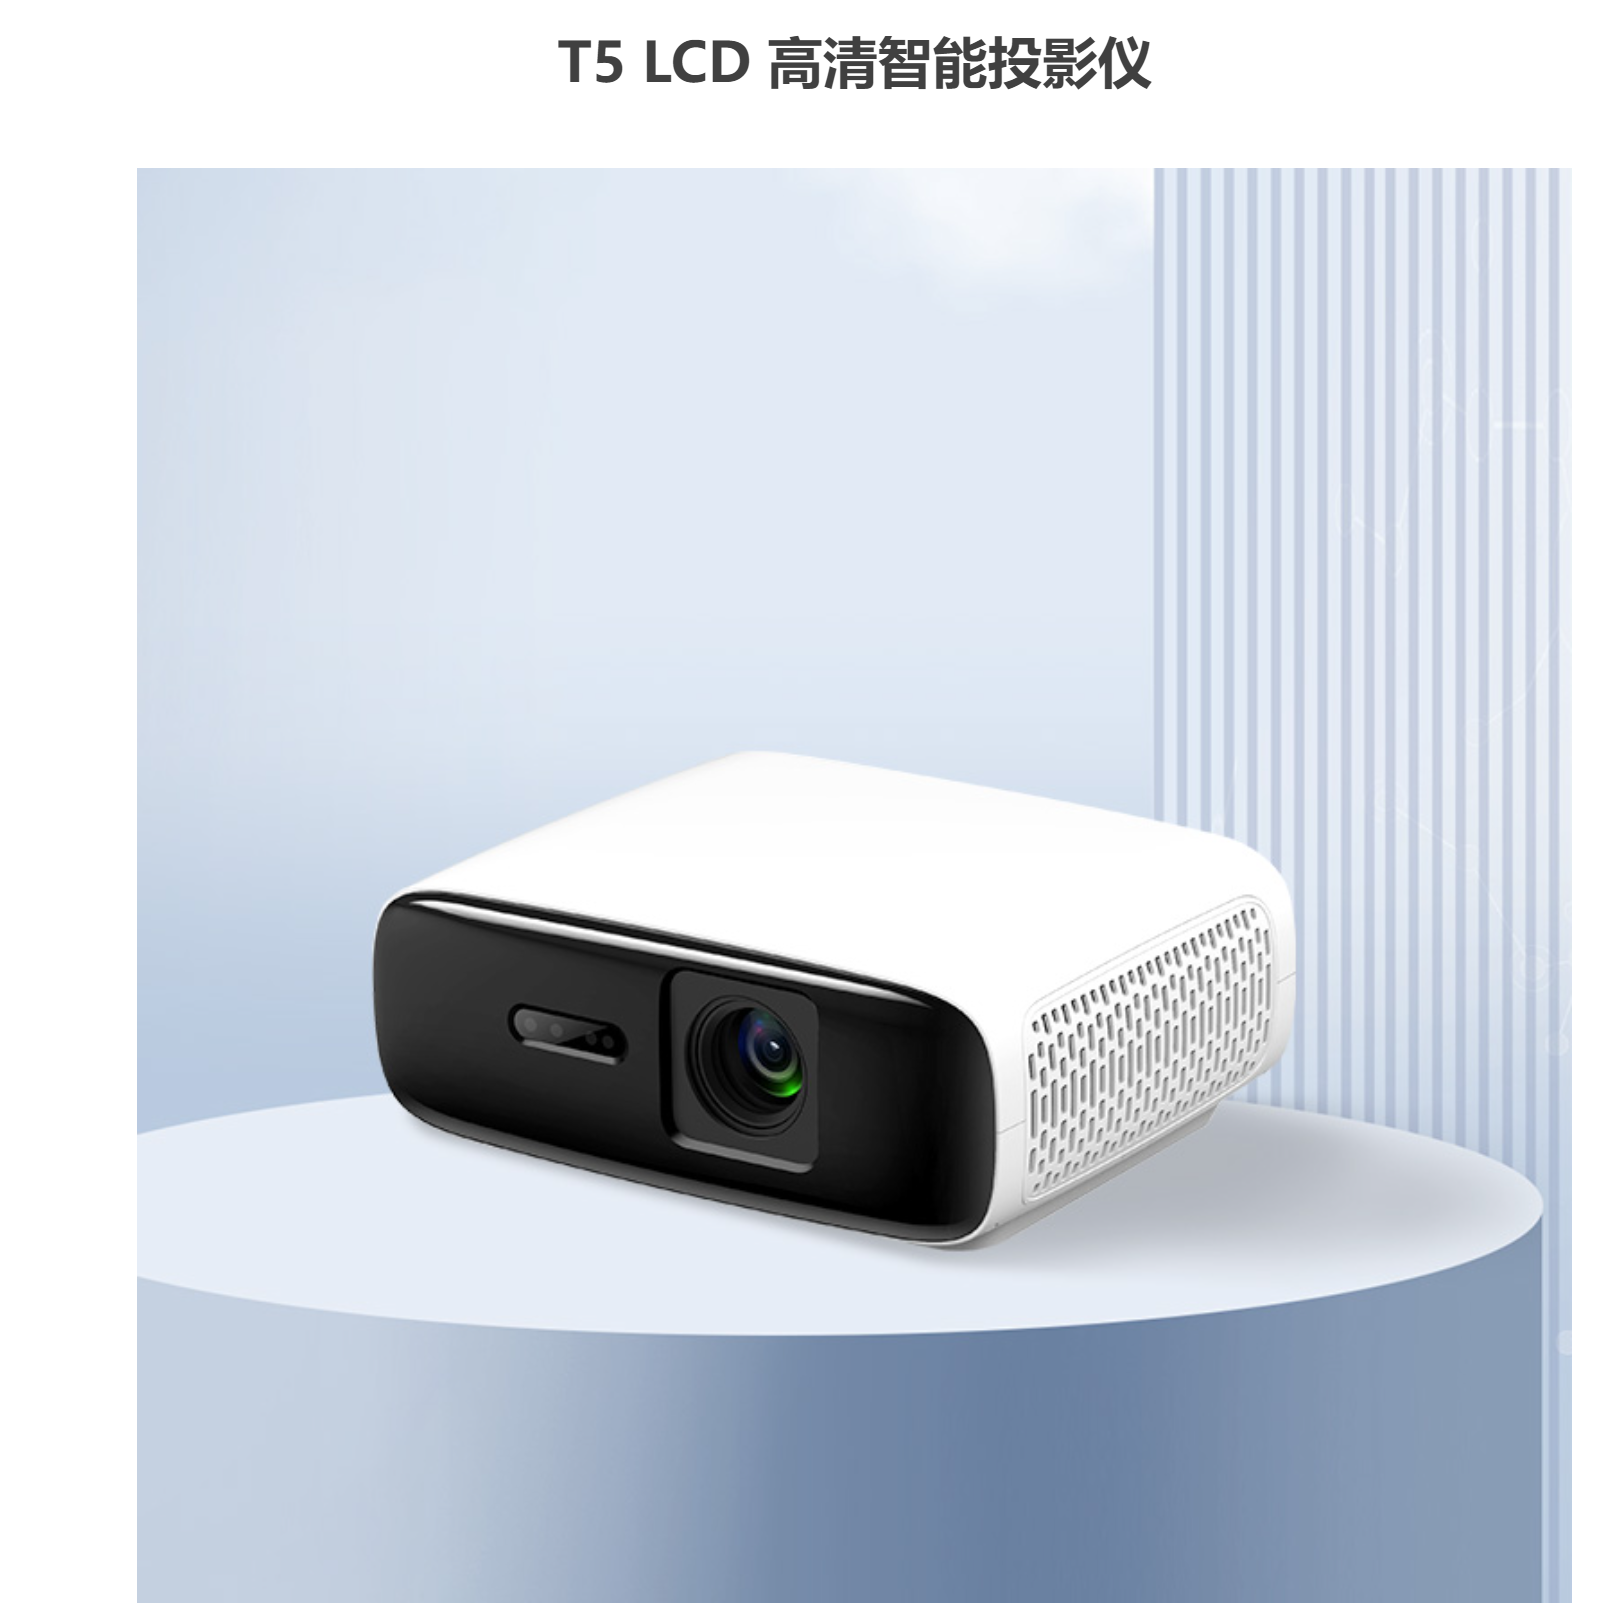 T5LCD高清智能投影仪/行业定制